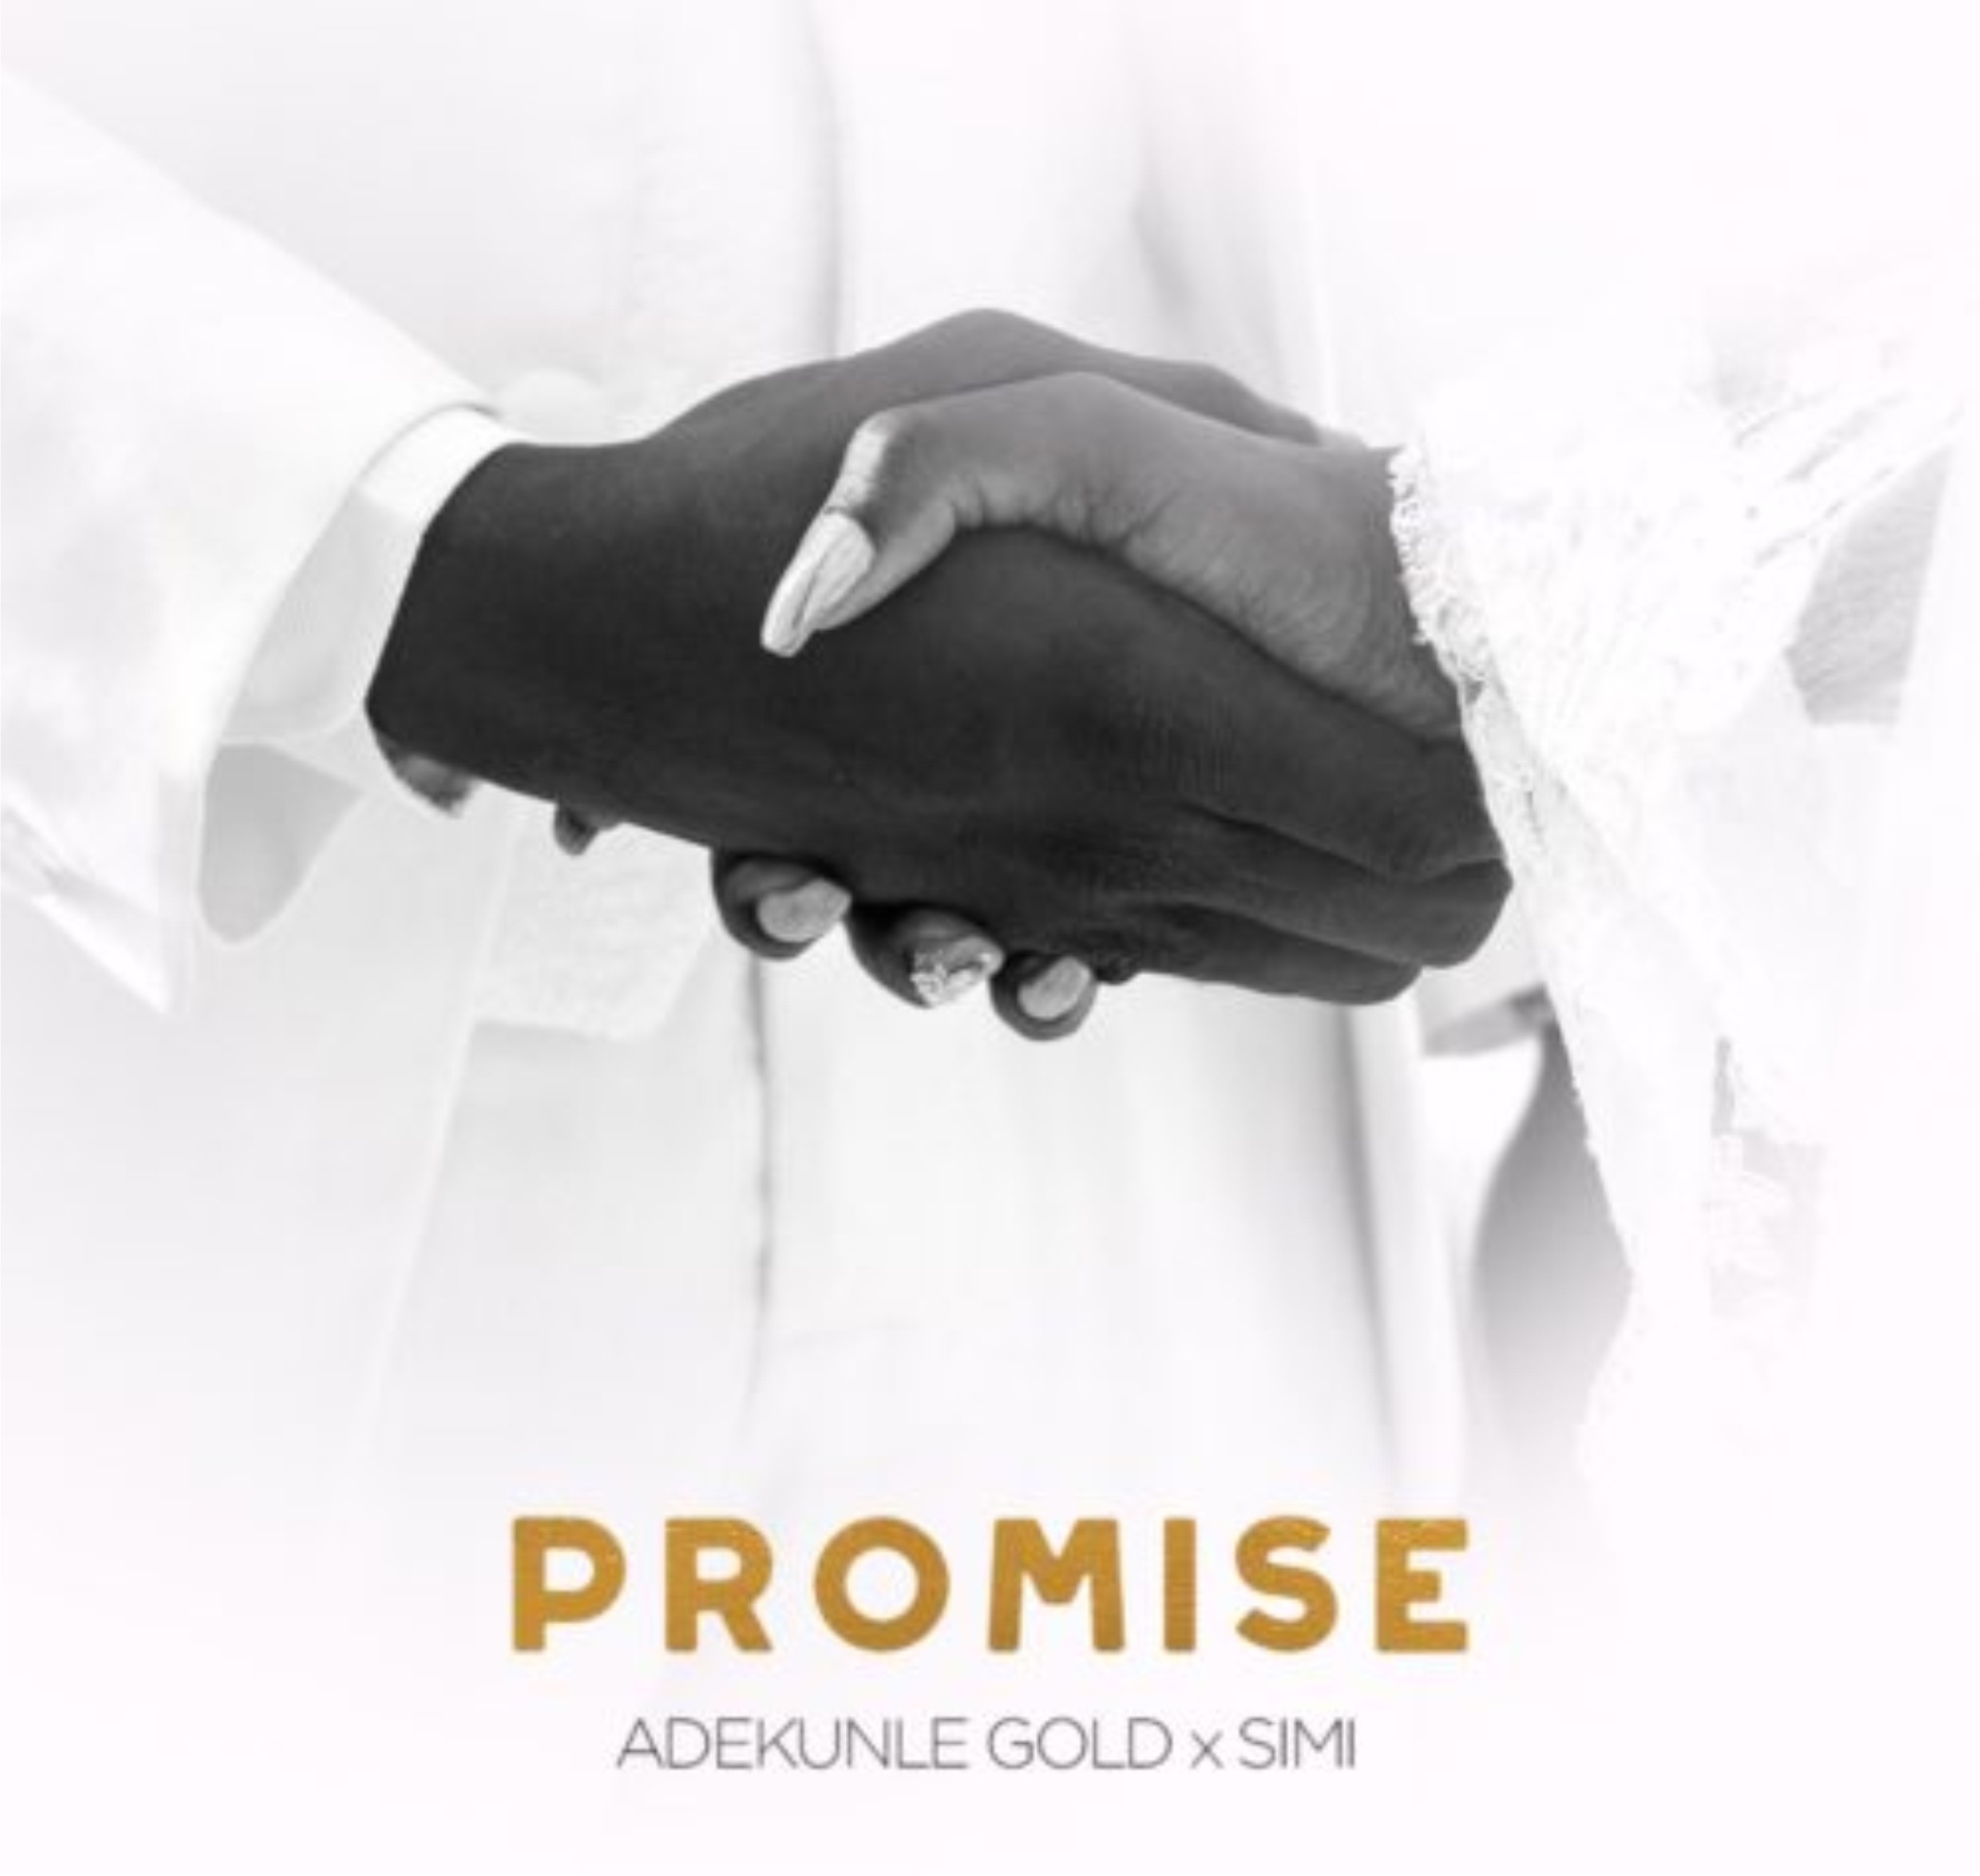 Download Video: Adekunle Gold x Simi – “Promise”